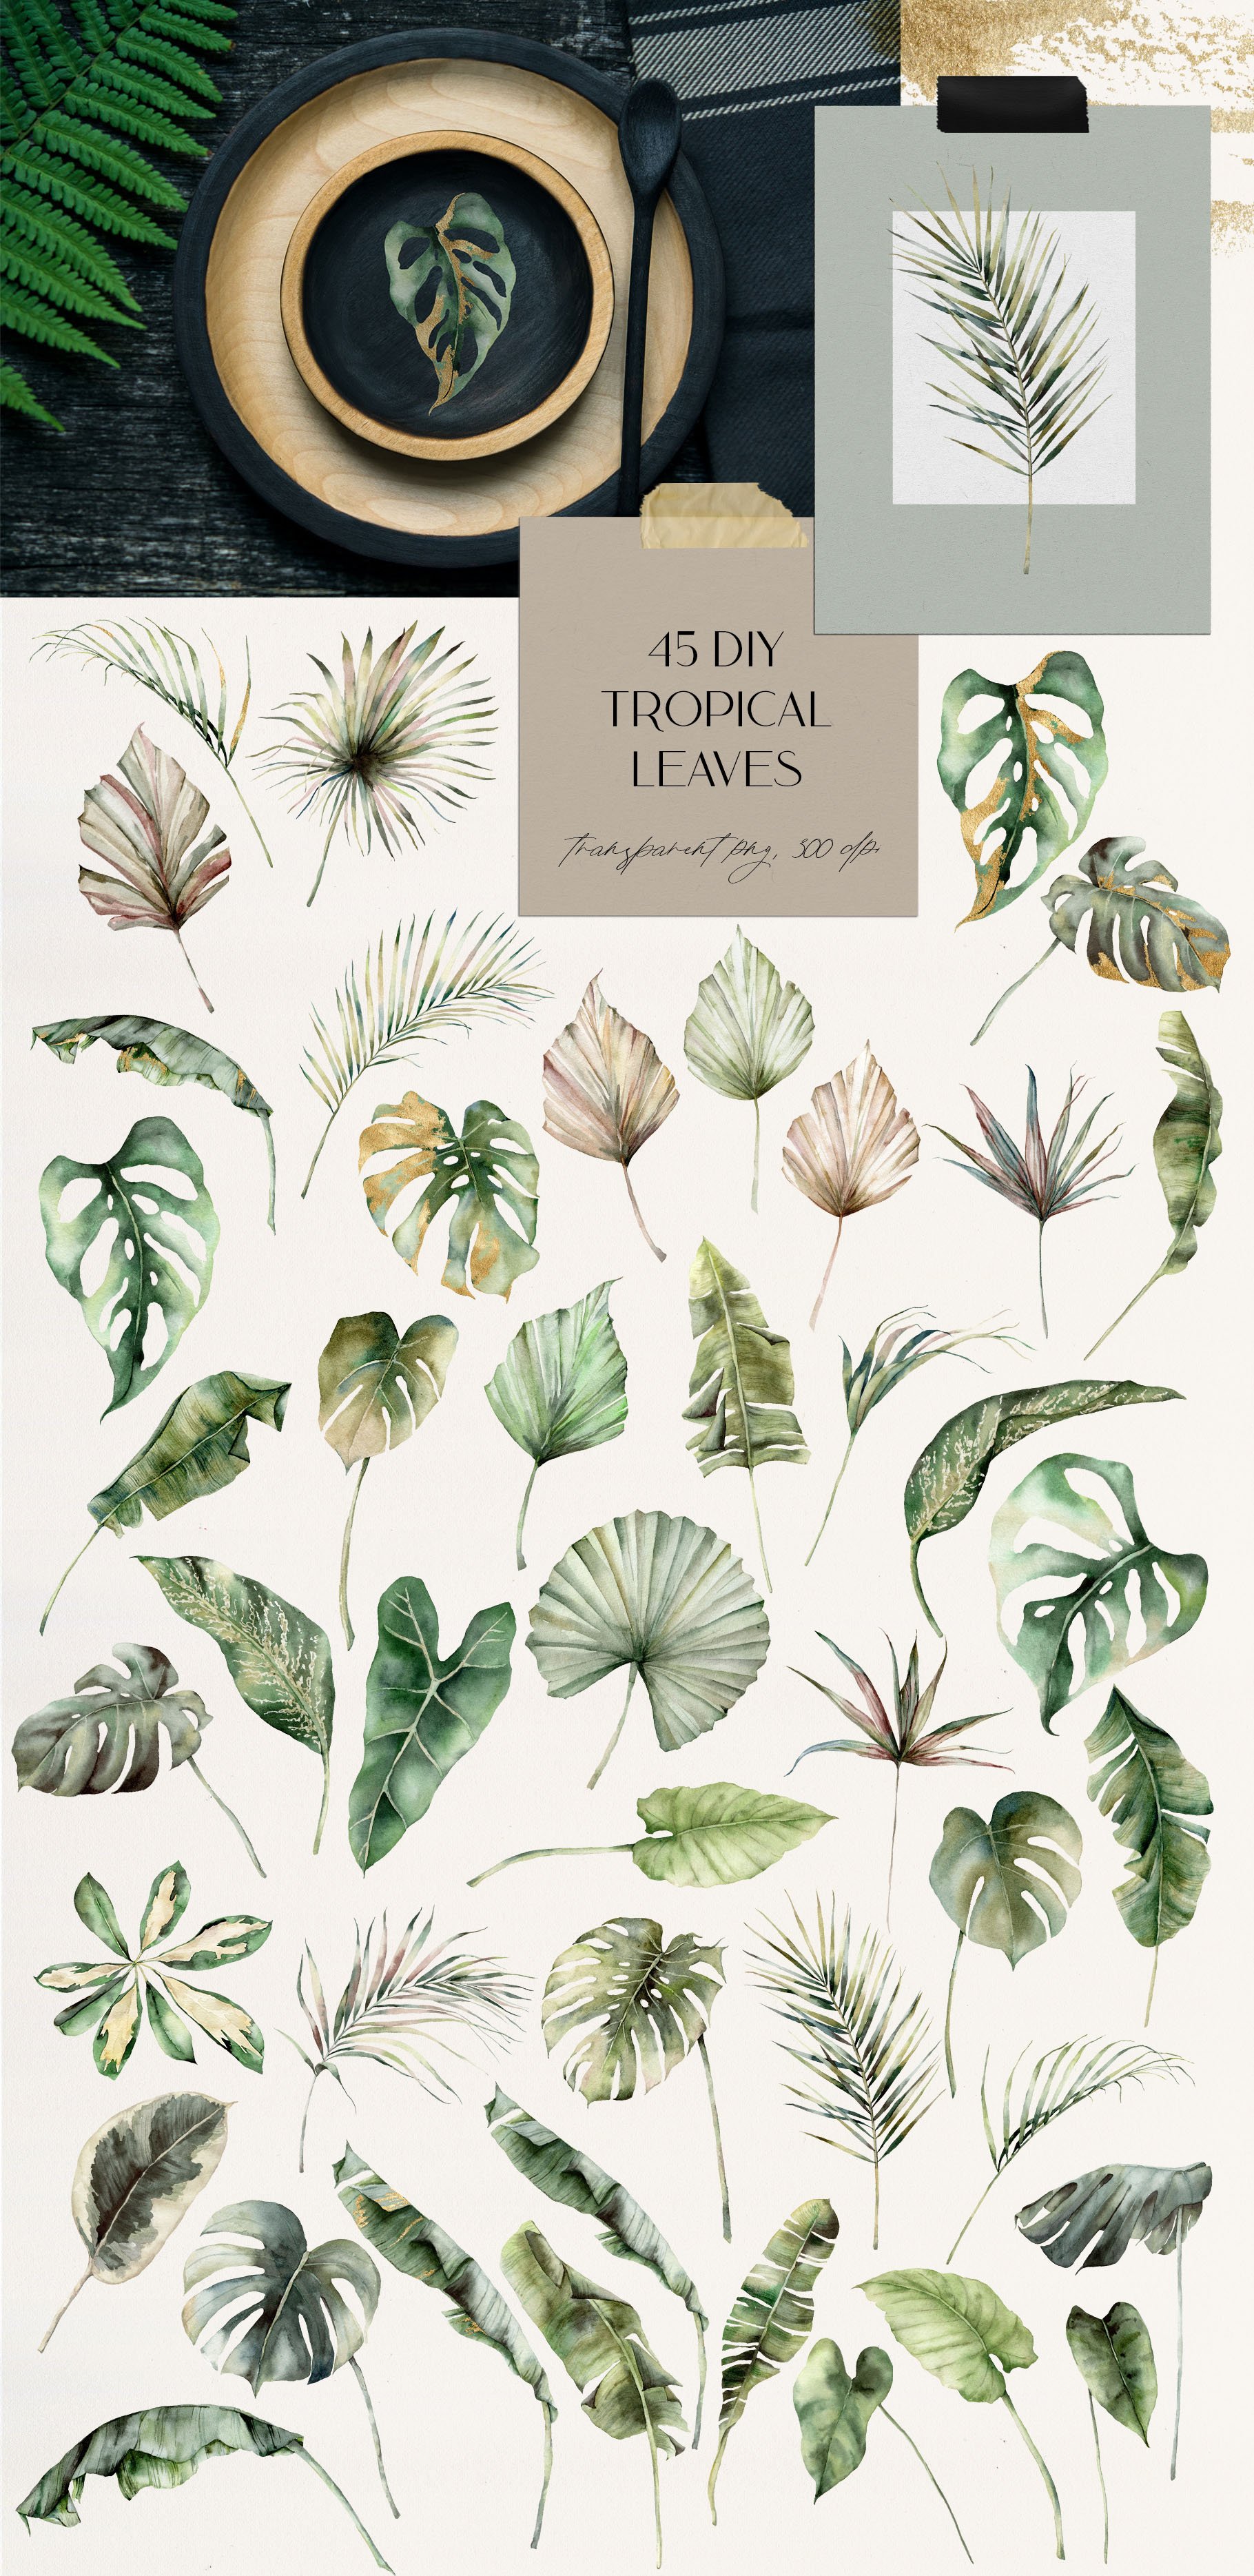 Tropicana - Watercolor Tropical Leaves, Flowers